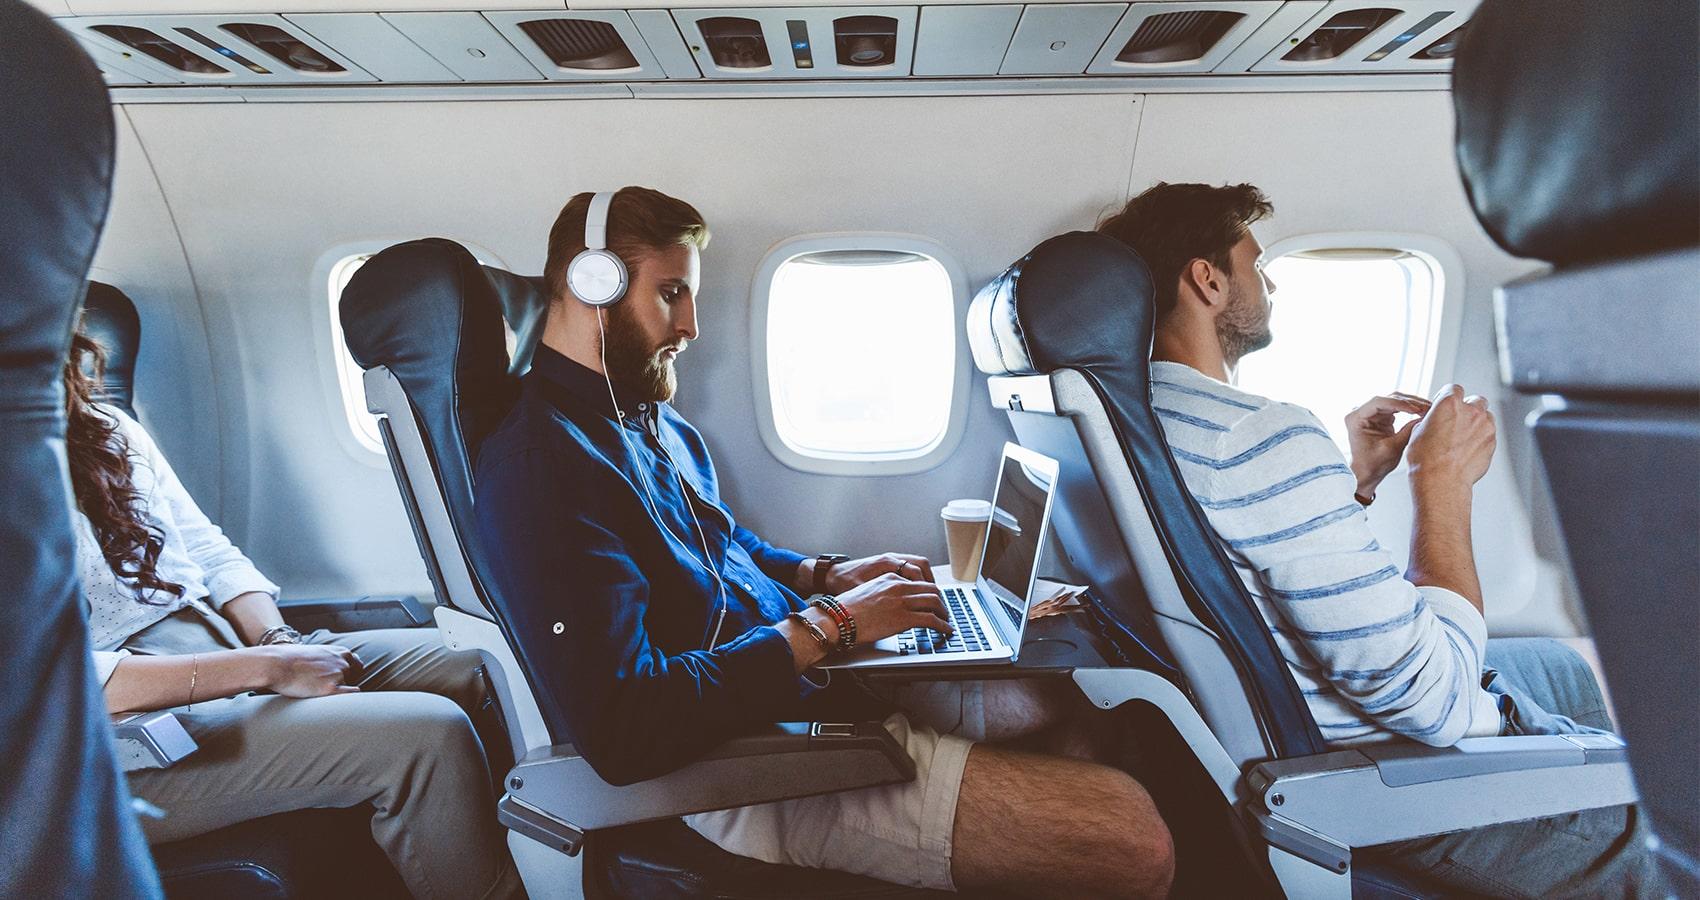 People on plane using WiFI